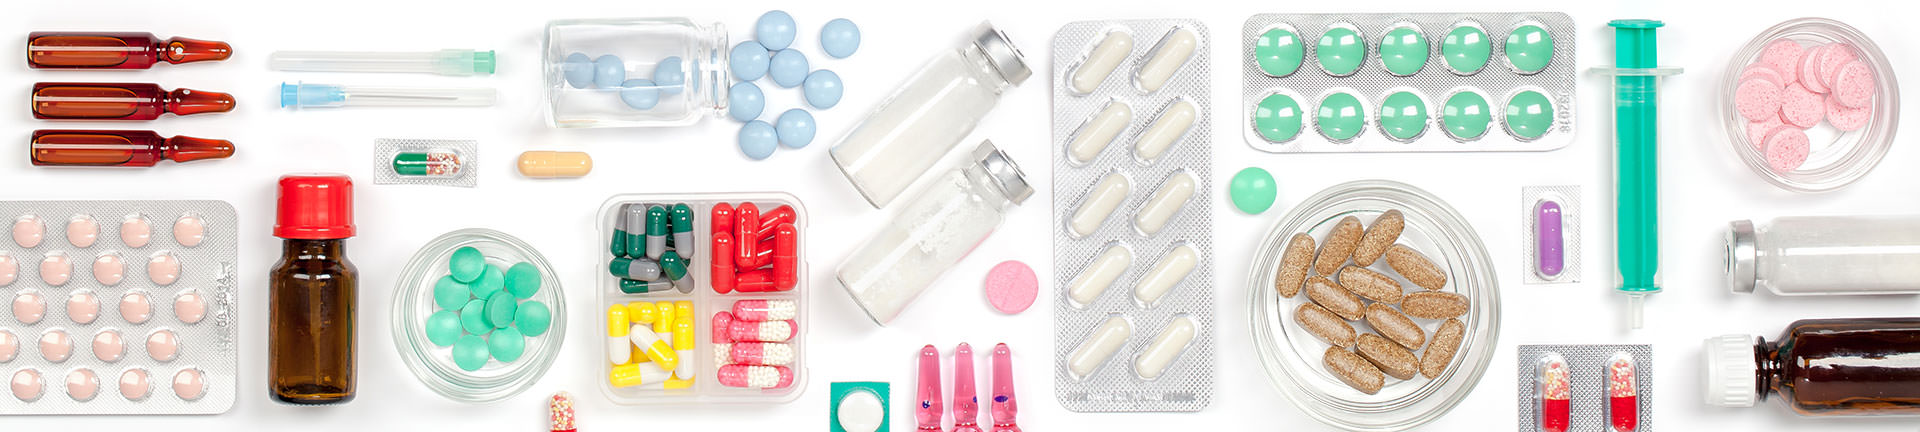 Variety of Medication Pharma